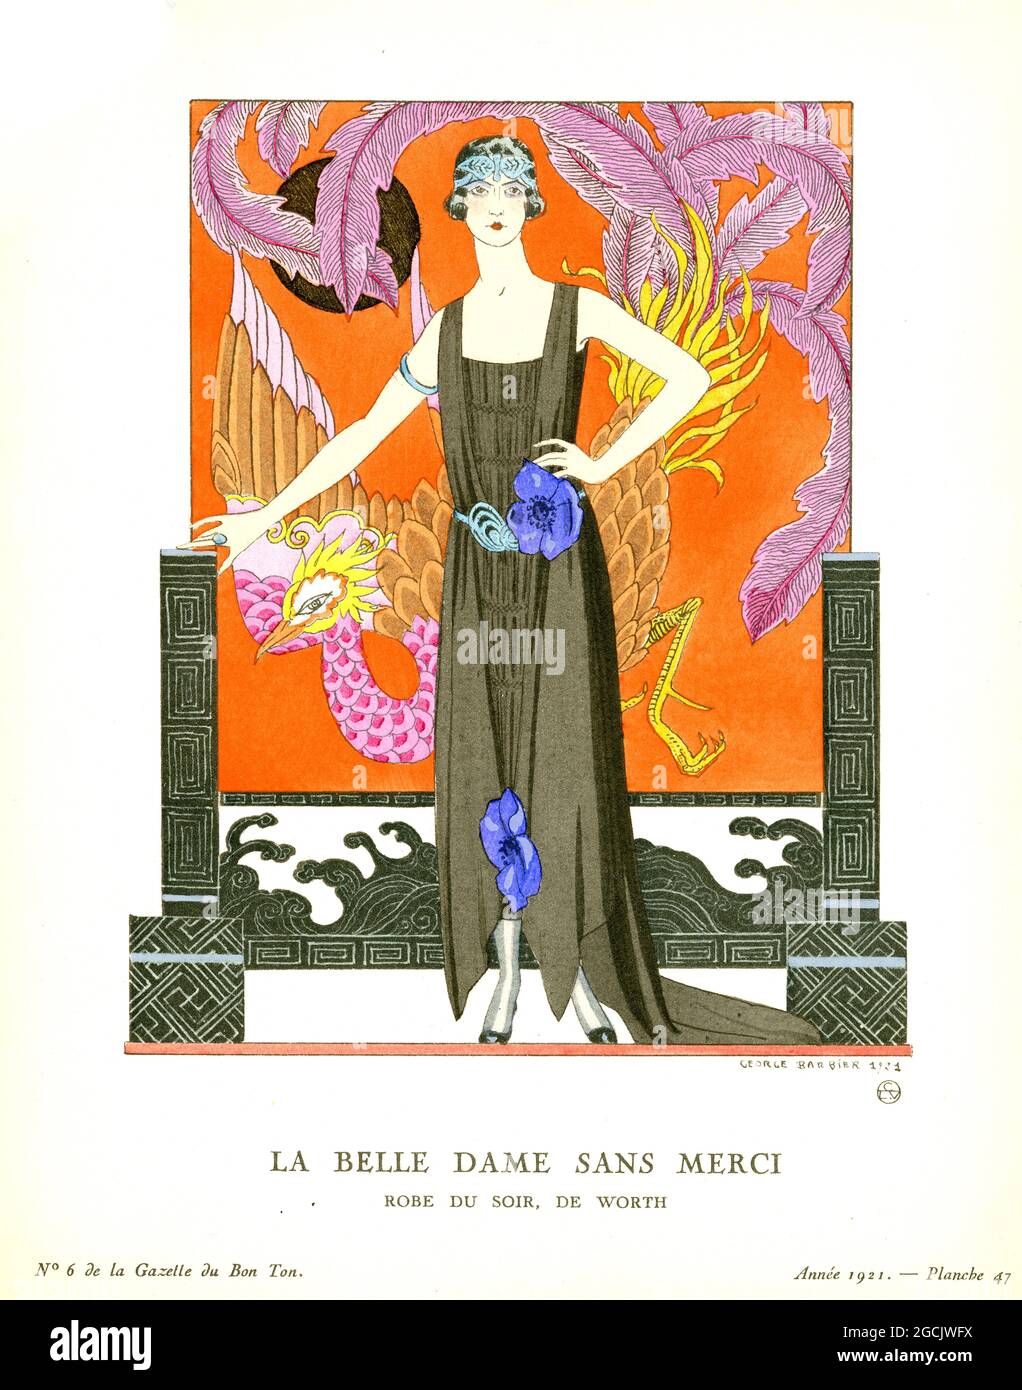 George Barbier artwork - La Belle Dame Sans Merci Stock Photo